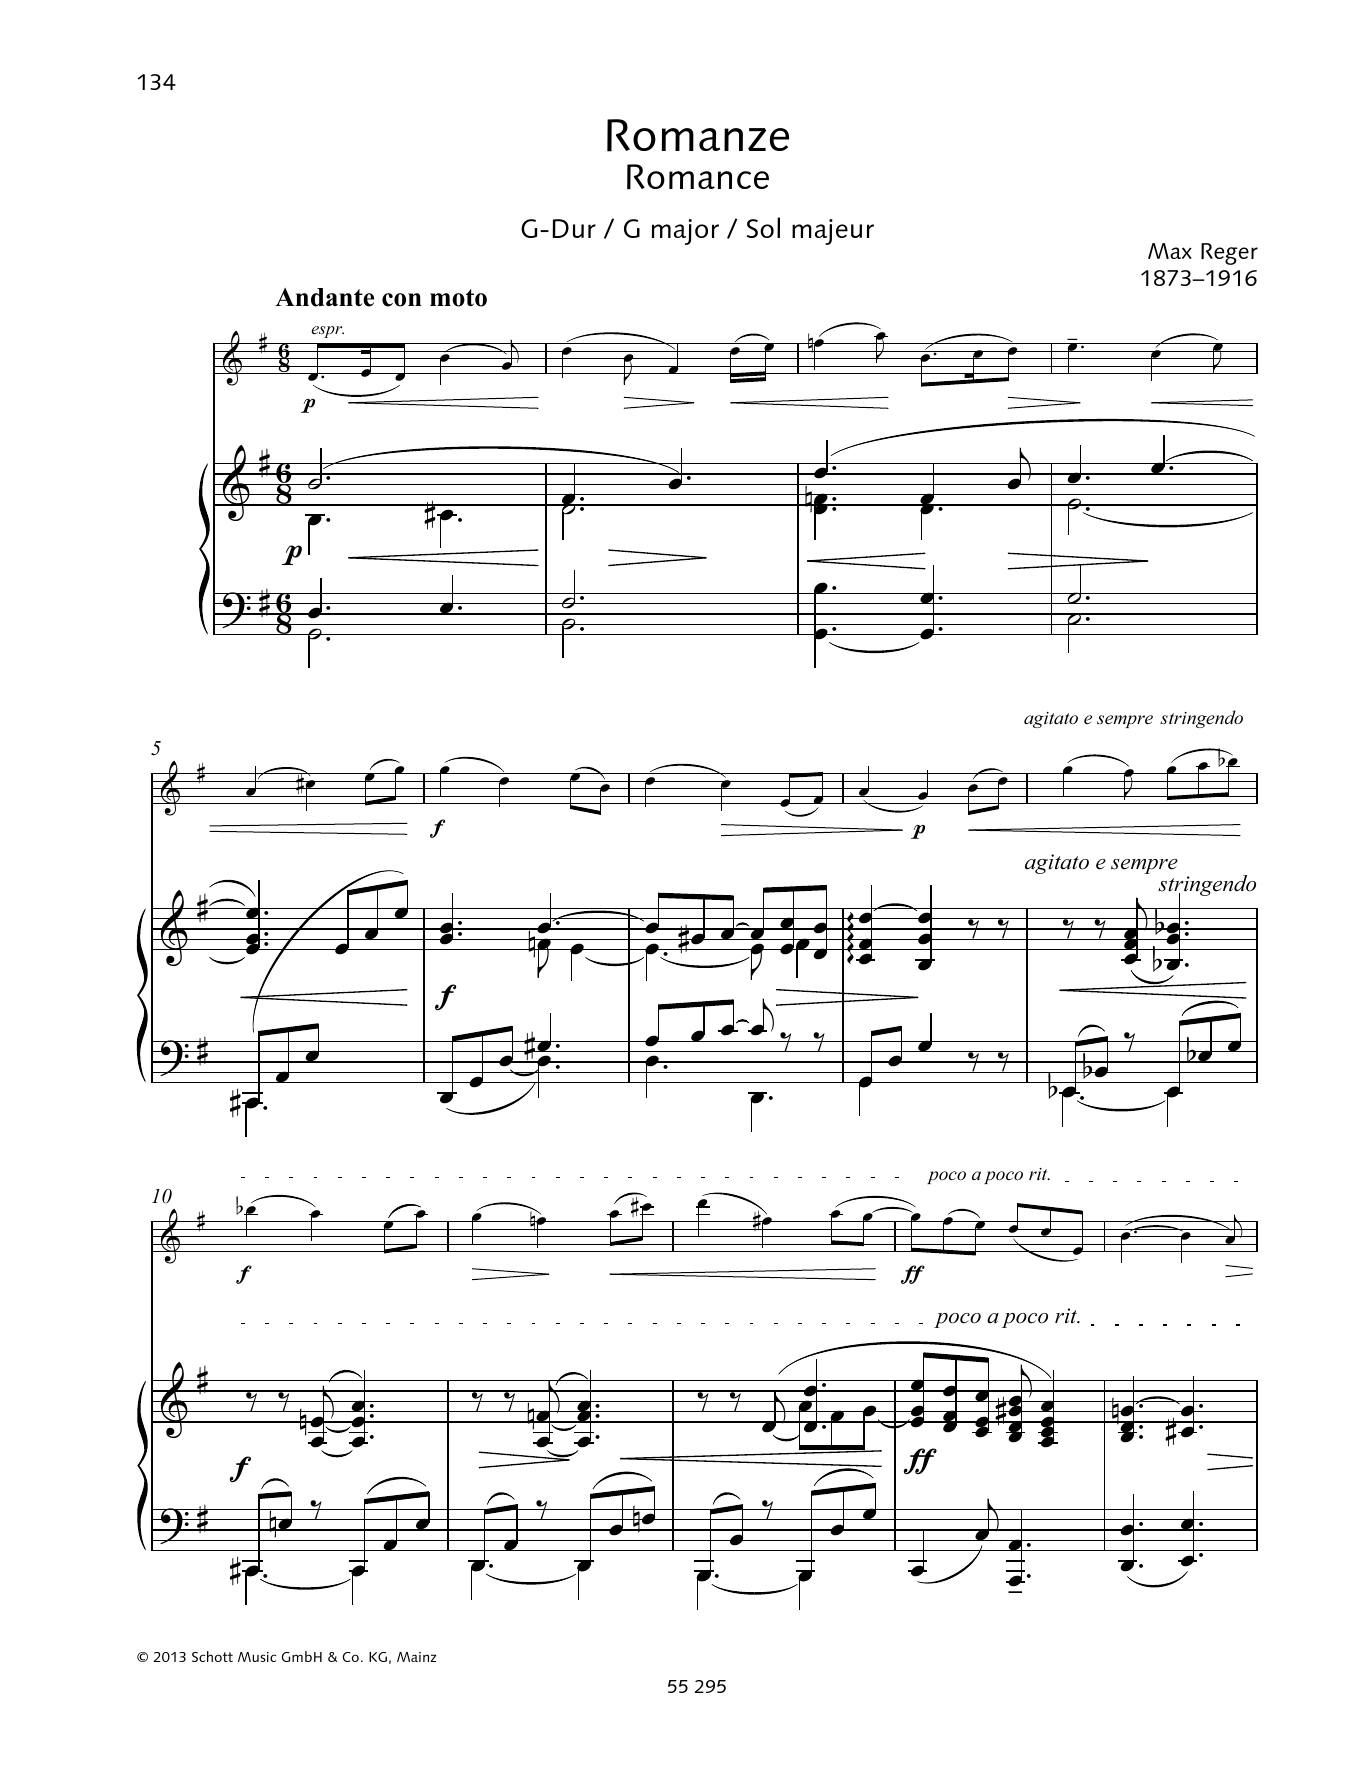 Romance G major (String Solo) von Max Reger